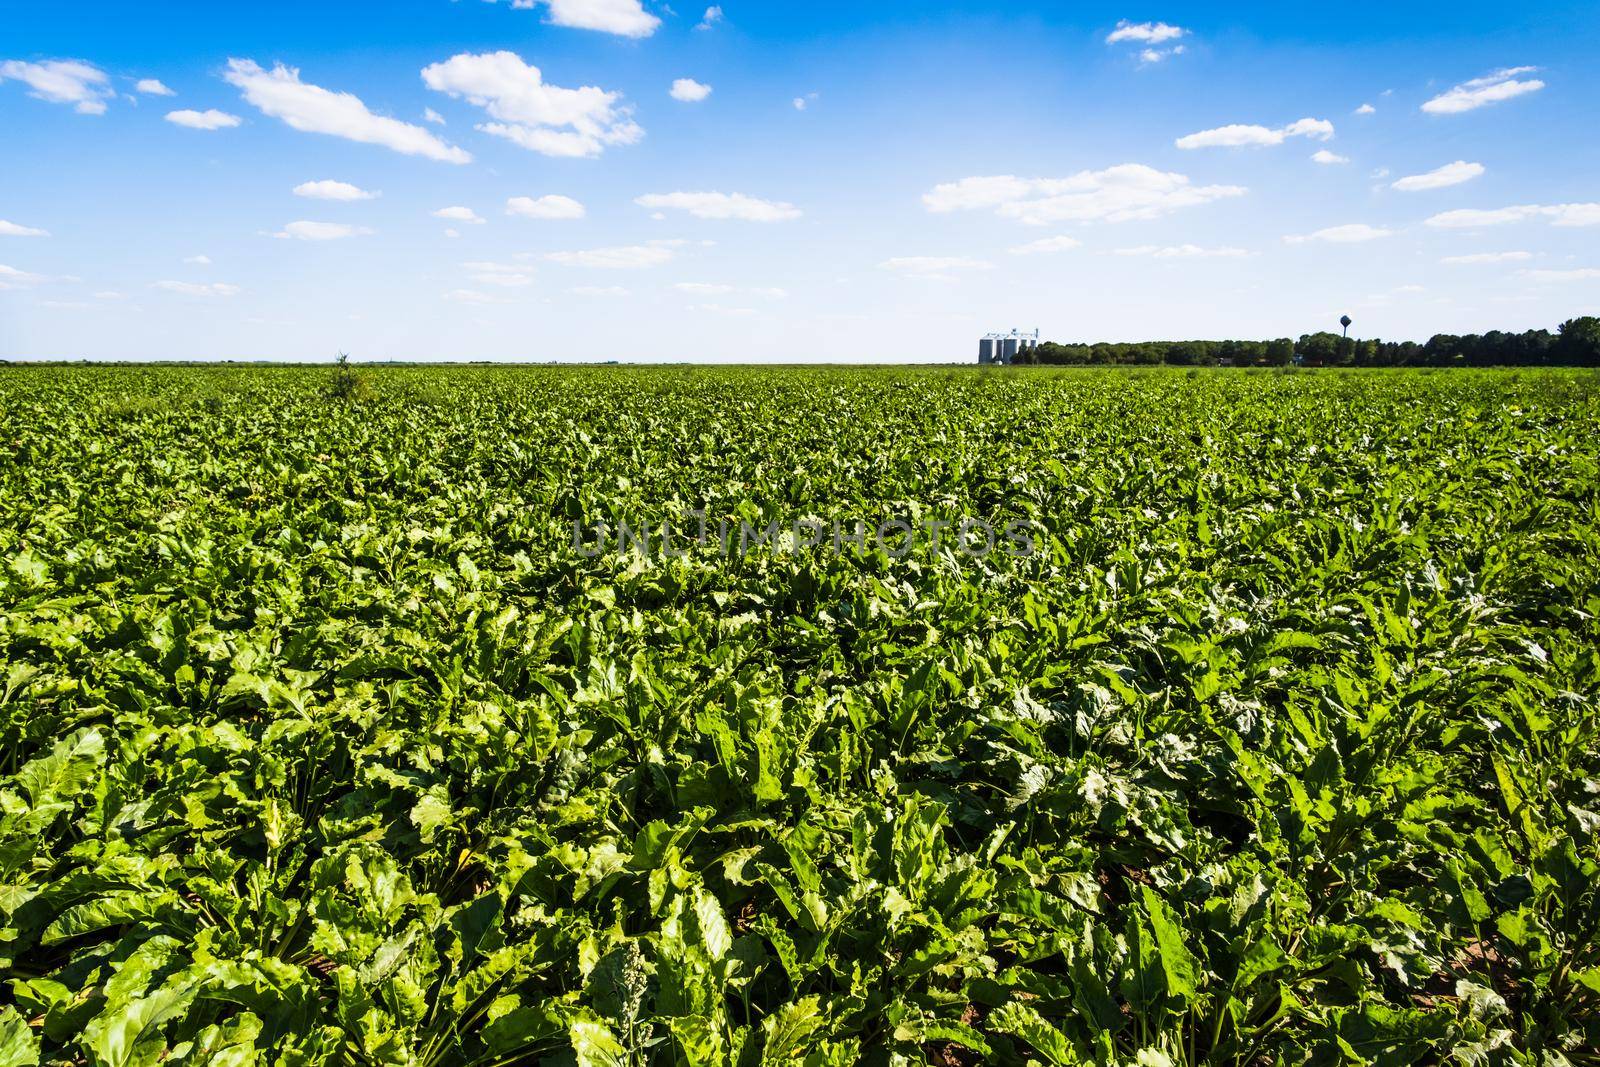 Sugar beet (beta vulgaris) agricultural field in summer. Agricultural landscape.